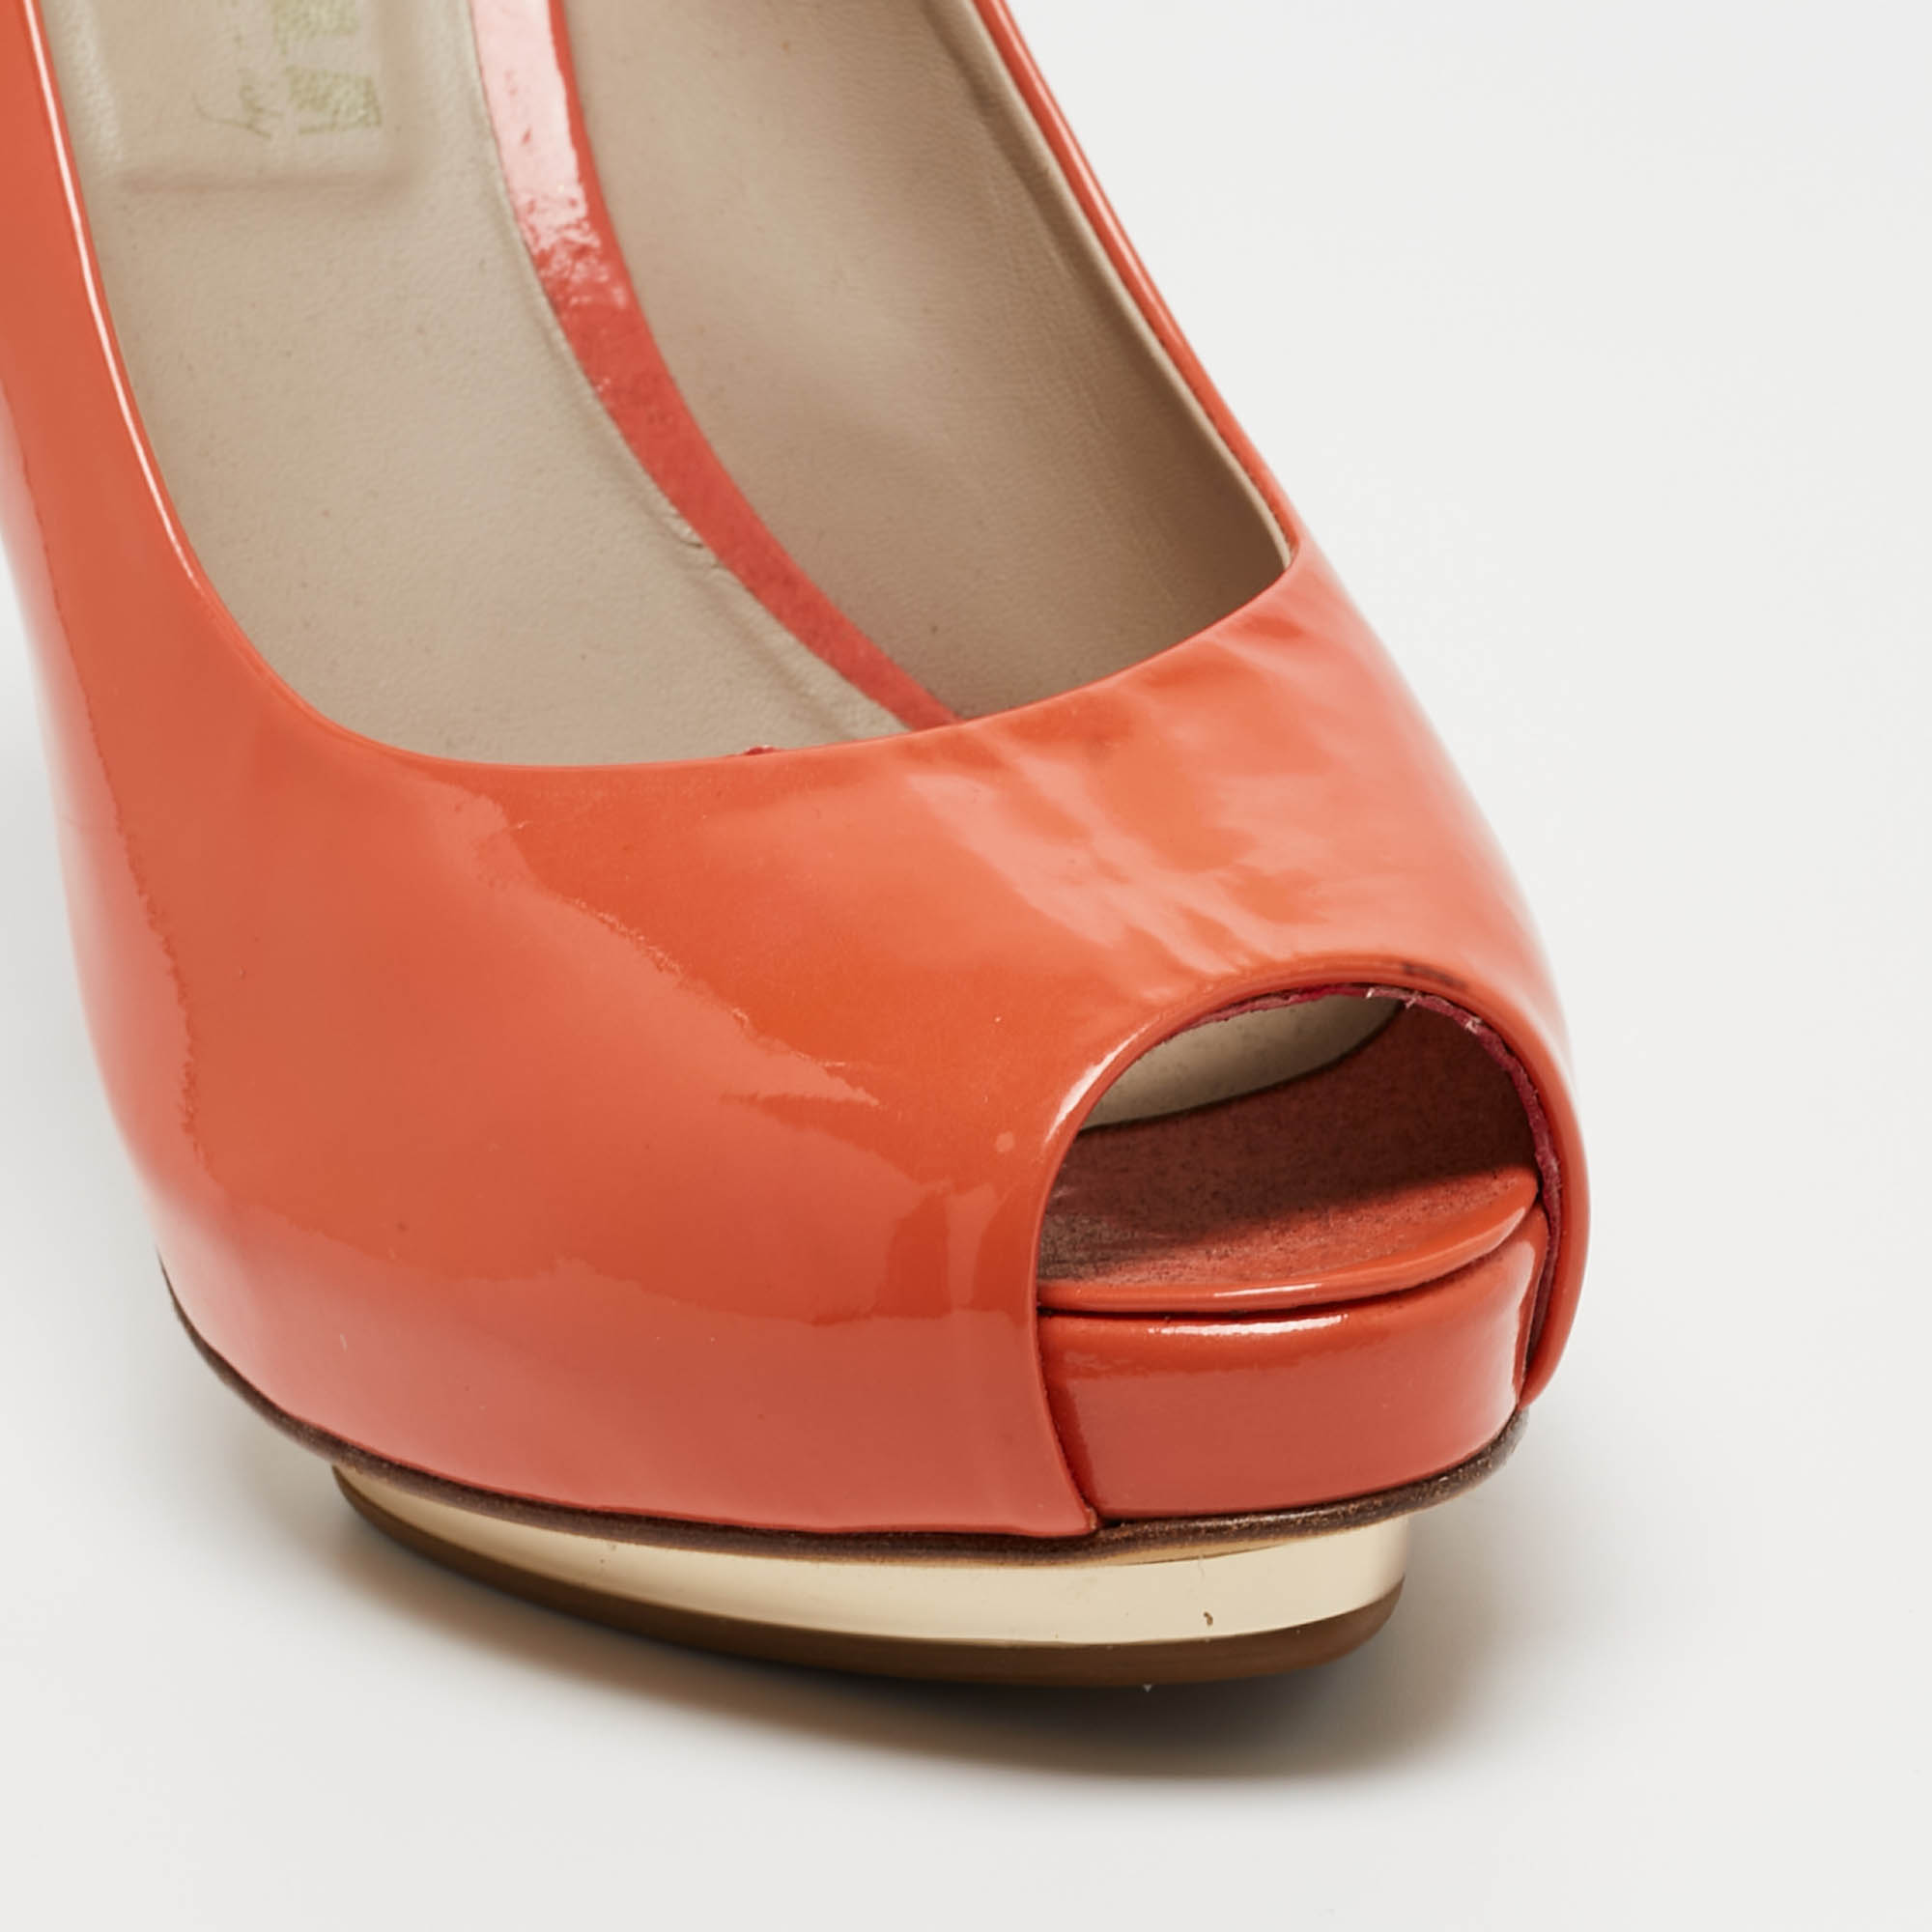 Le Silla Orange Patent Peep Toe Pumps Size 39.5